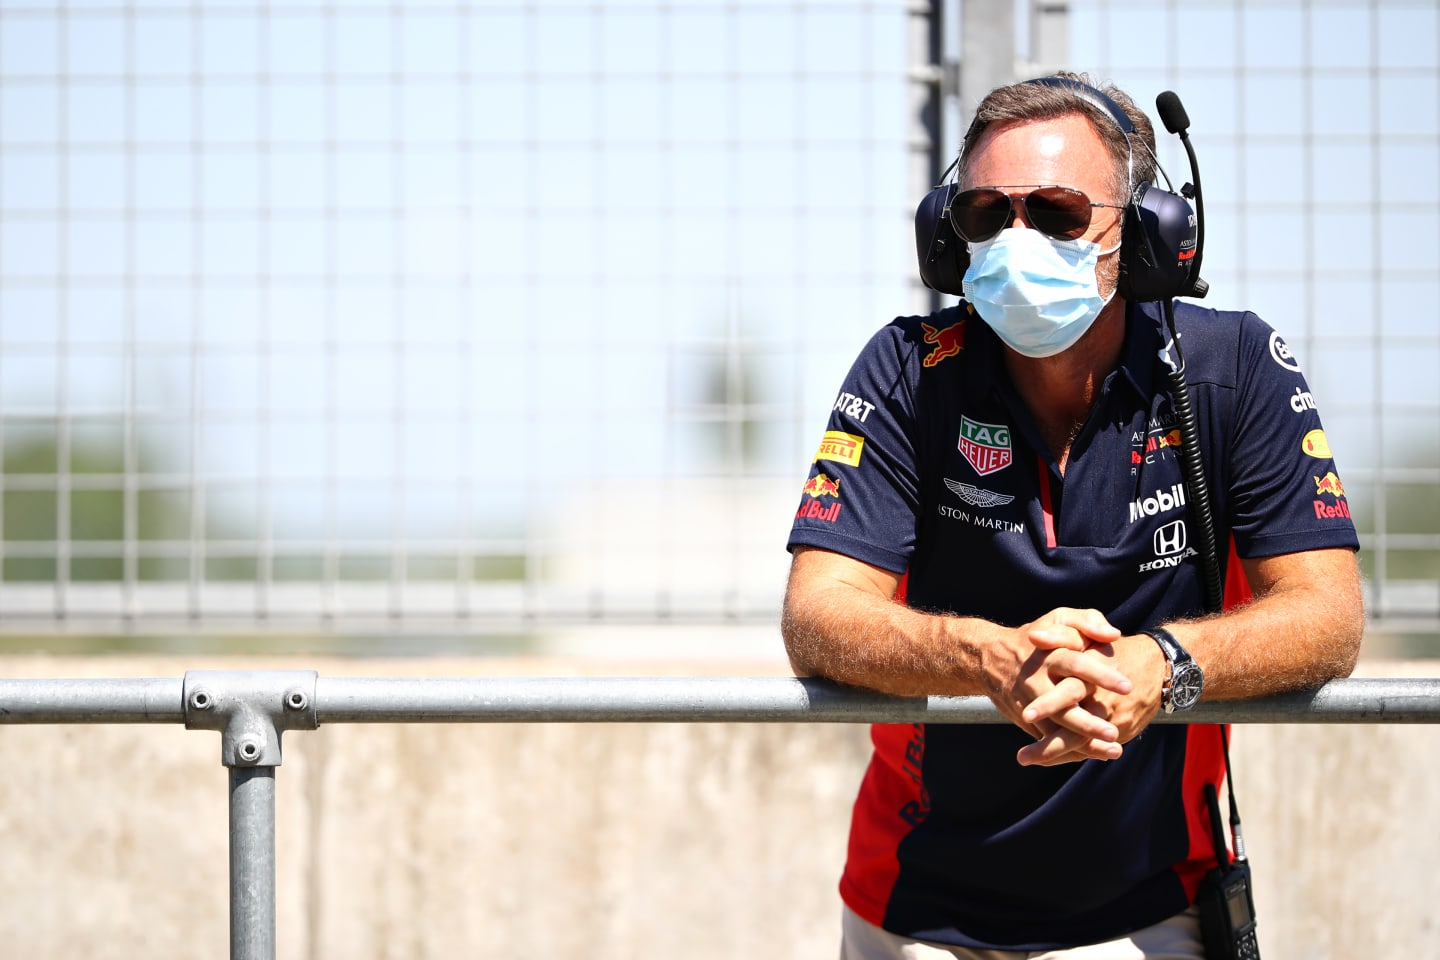 NORTHAMPTON, ENGLAND - JUNE 25: Red Bull Racing Team Principal Christian Horner looks on in the